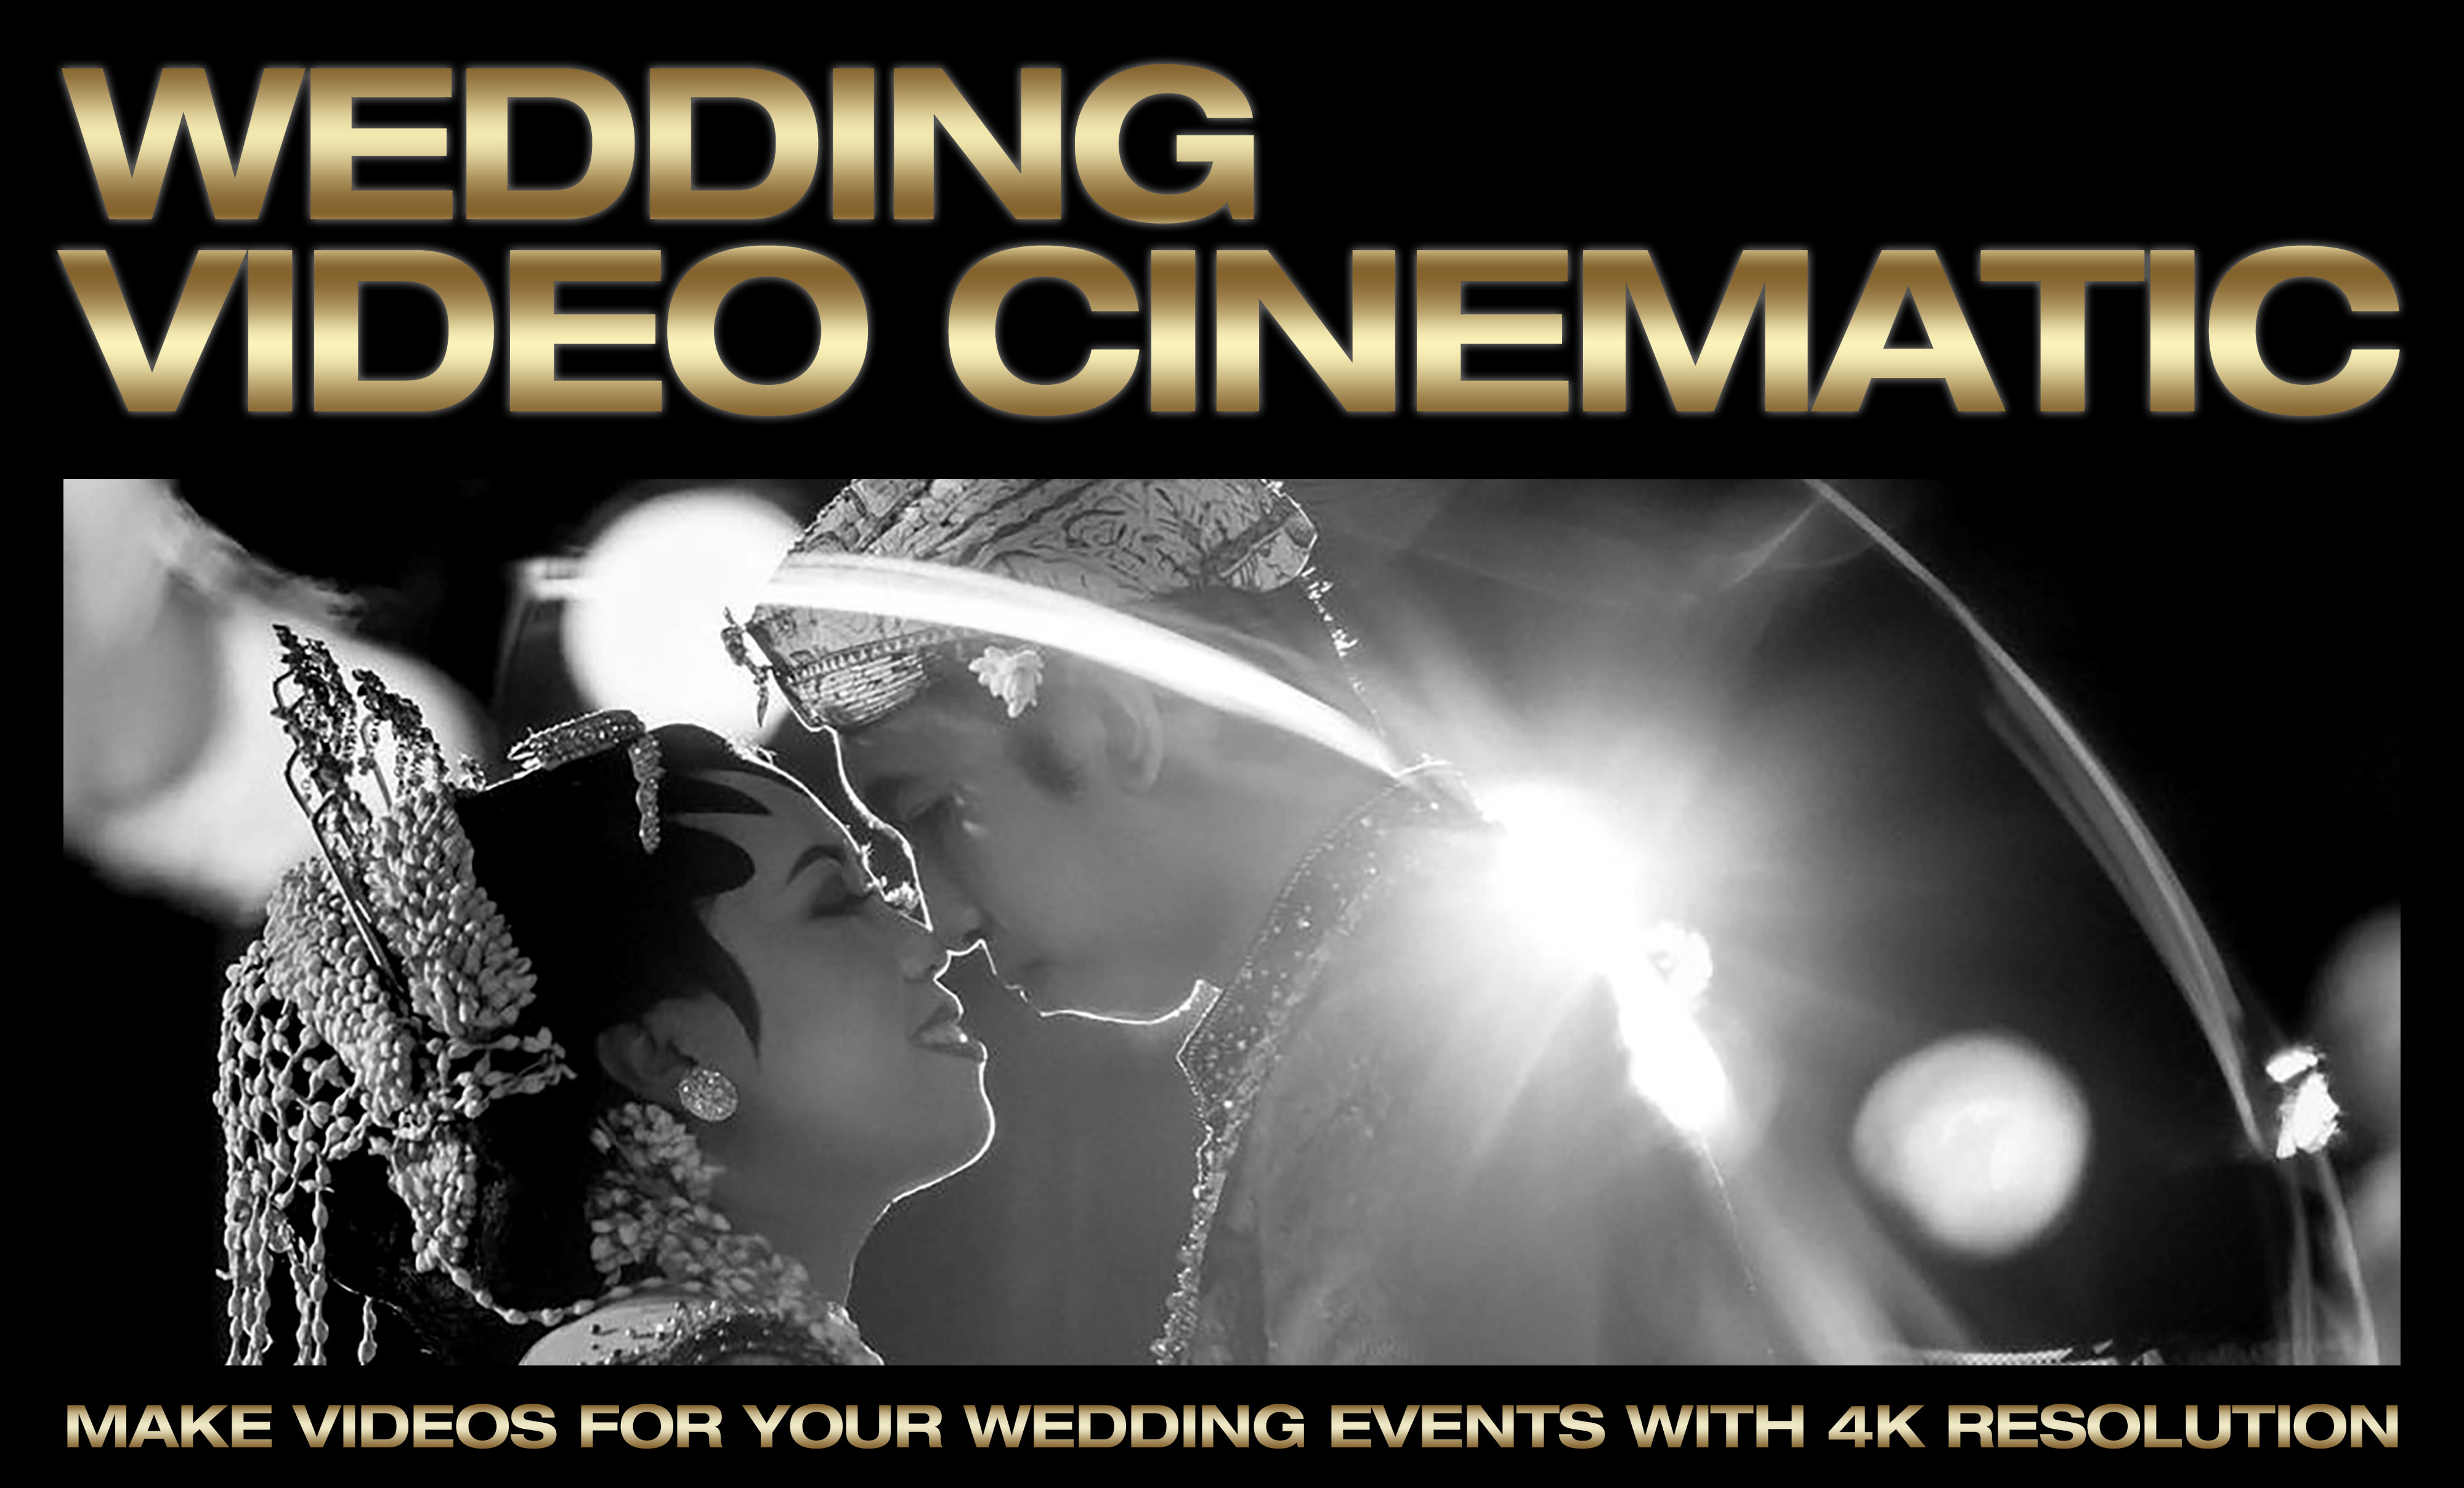 Edit exclusive wedding video with elegant 4k cinematic film by Saufyamos |  Fiverr